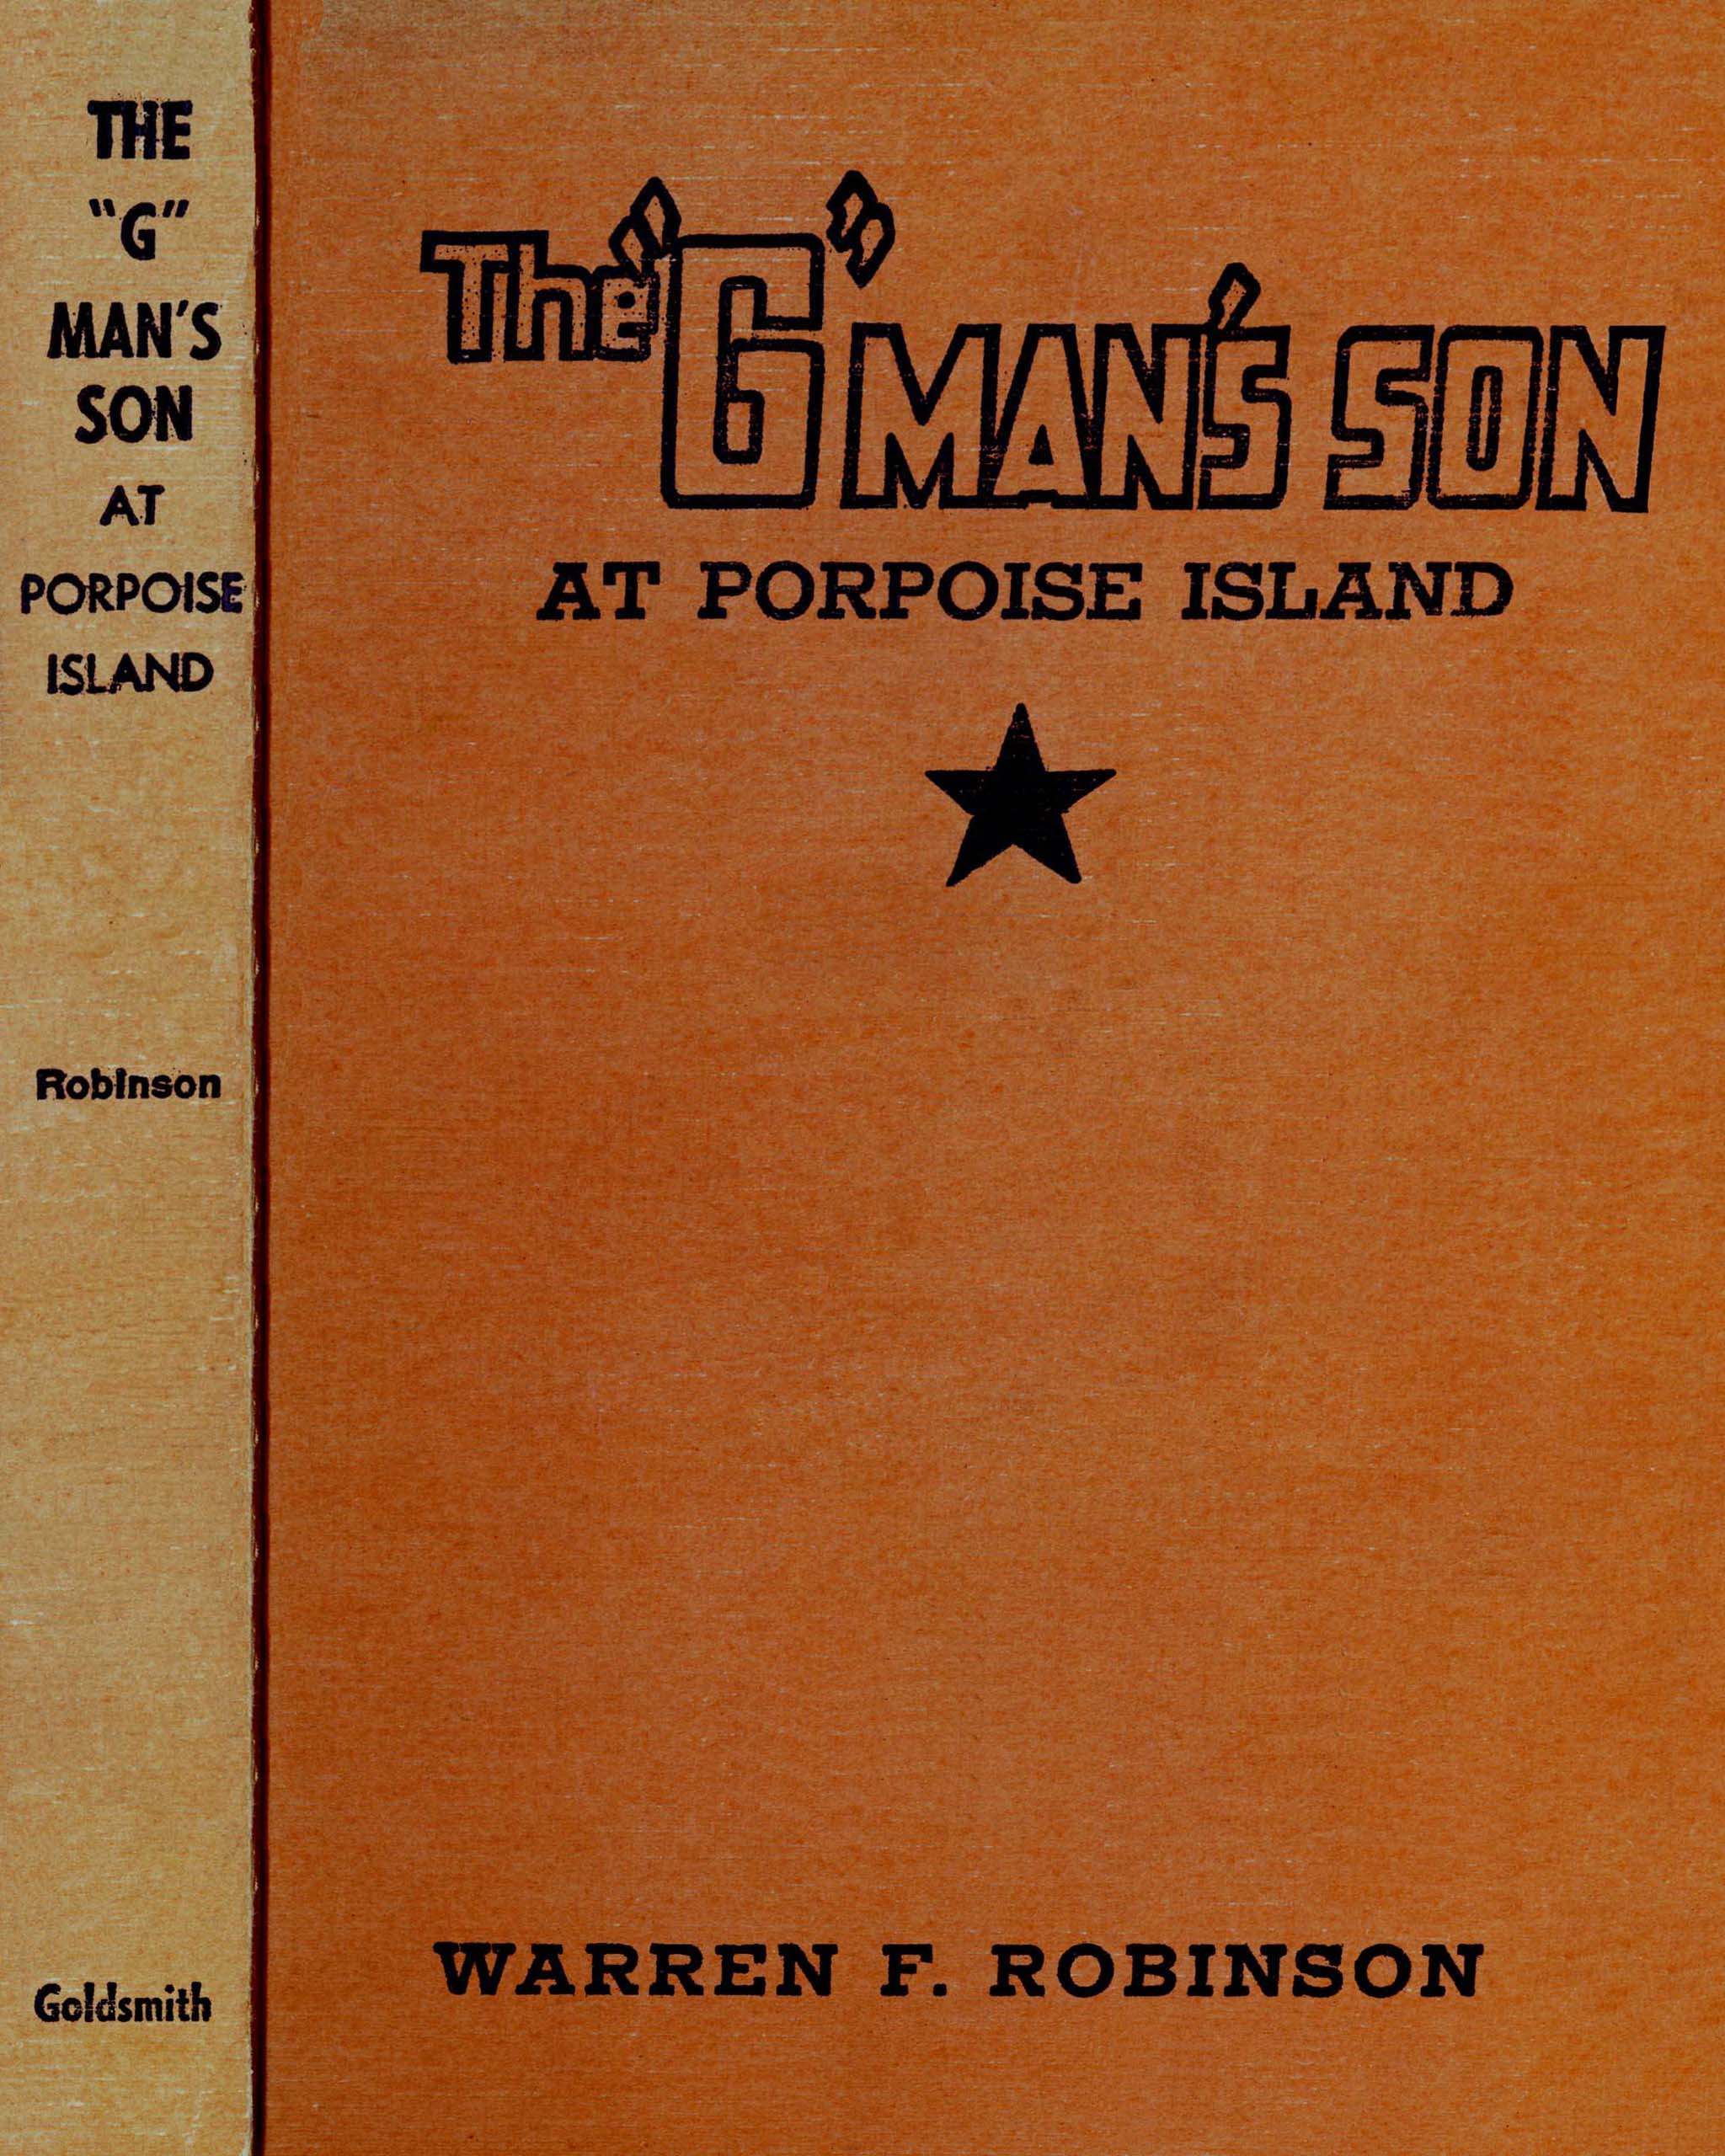 The G-man's son at Porpoise Island